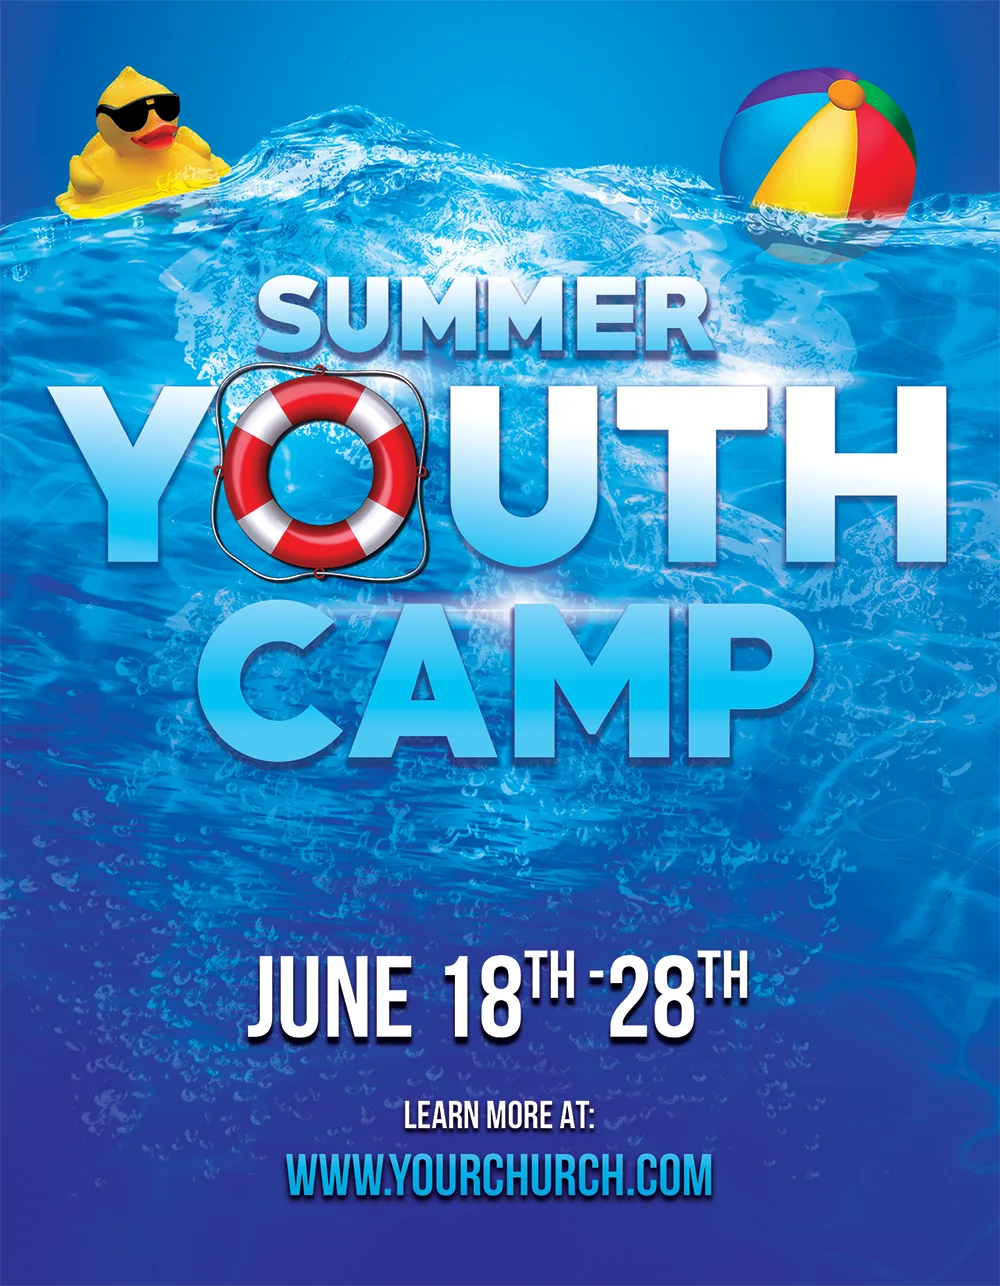 Folleto gratuito de la iglesia: campamento juvenil de verano por Ministry Voice